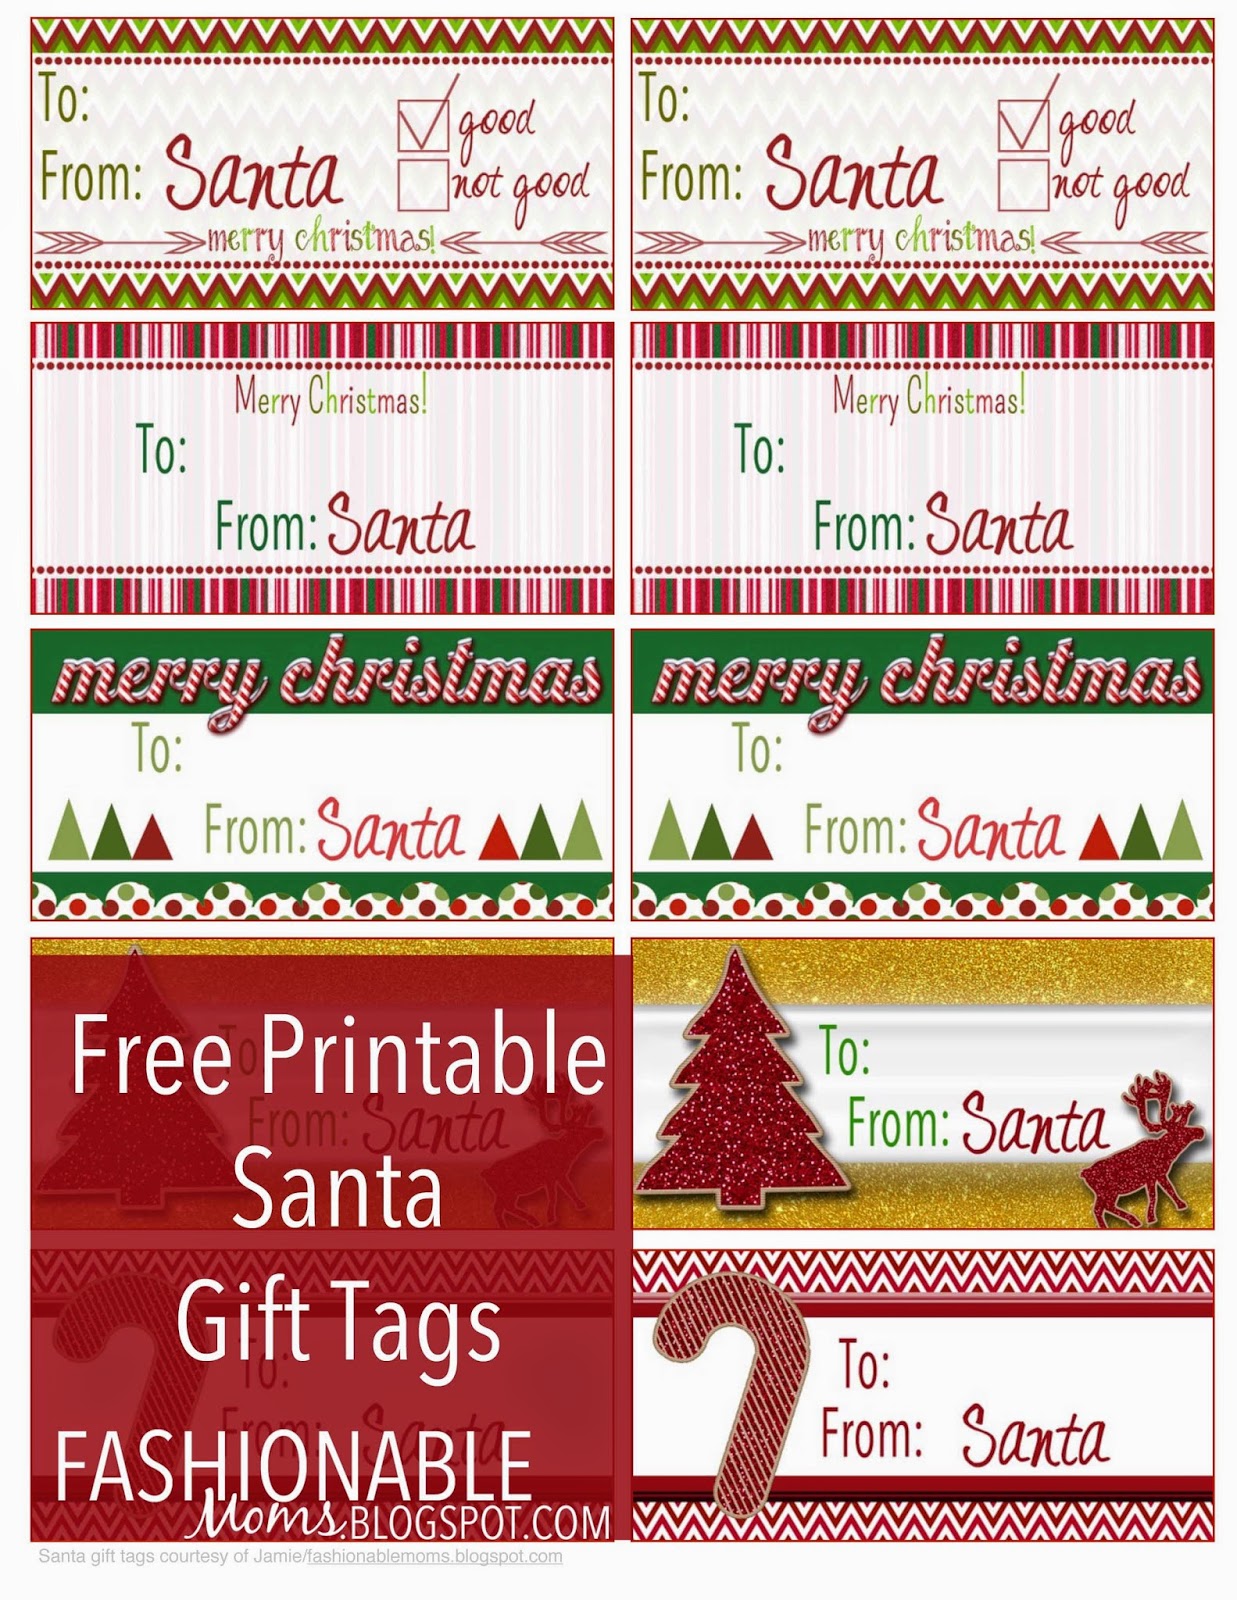 My Fashionable Designs: Free Printable Santa Gift Tags